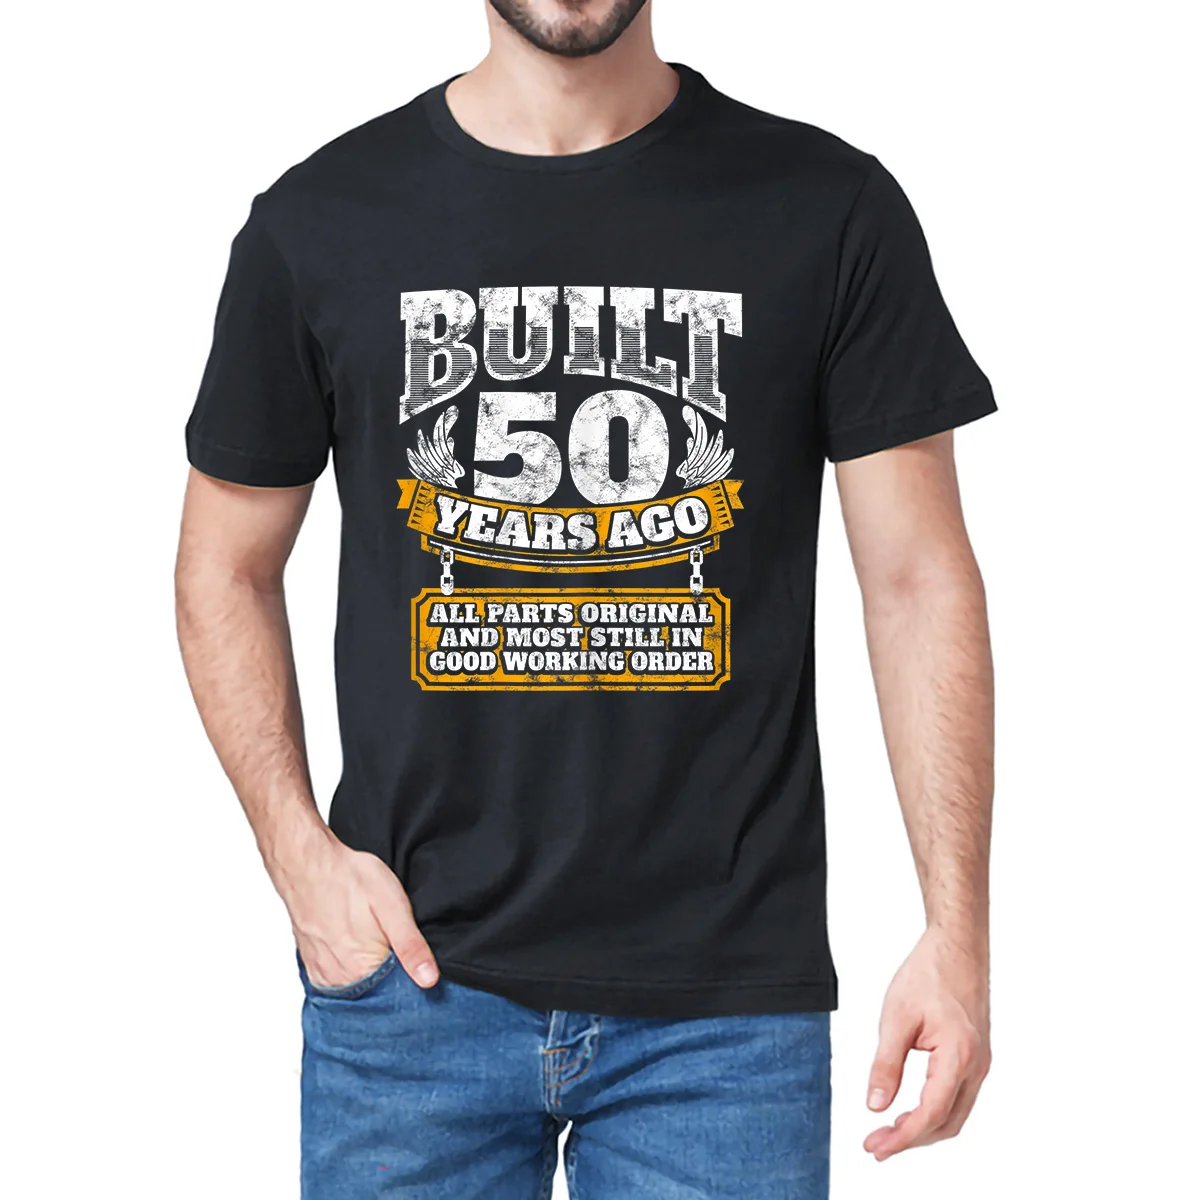 Unisex 100% Cotton Funny 50th Birthday Shirt B-Day Gift Saying Age 50 Year Joke Men T-Shirt Oversized Casual Tee Clothing Street